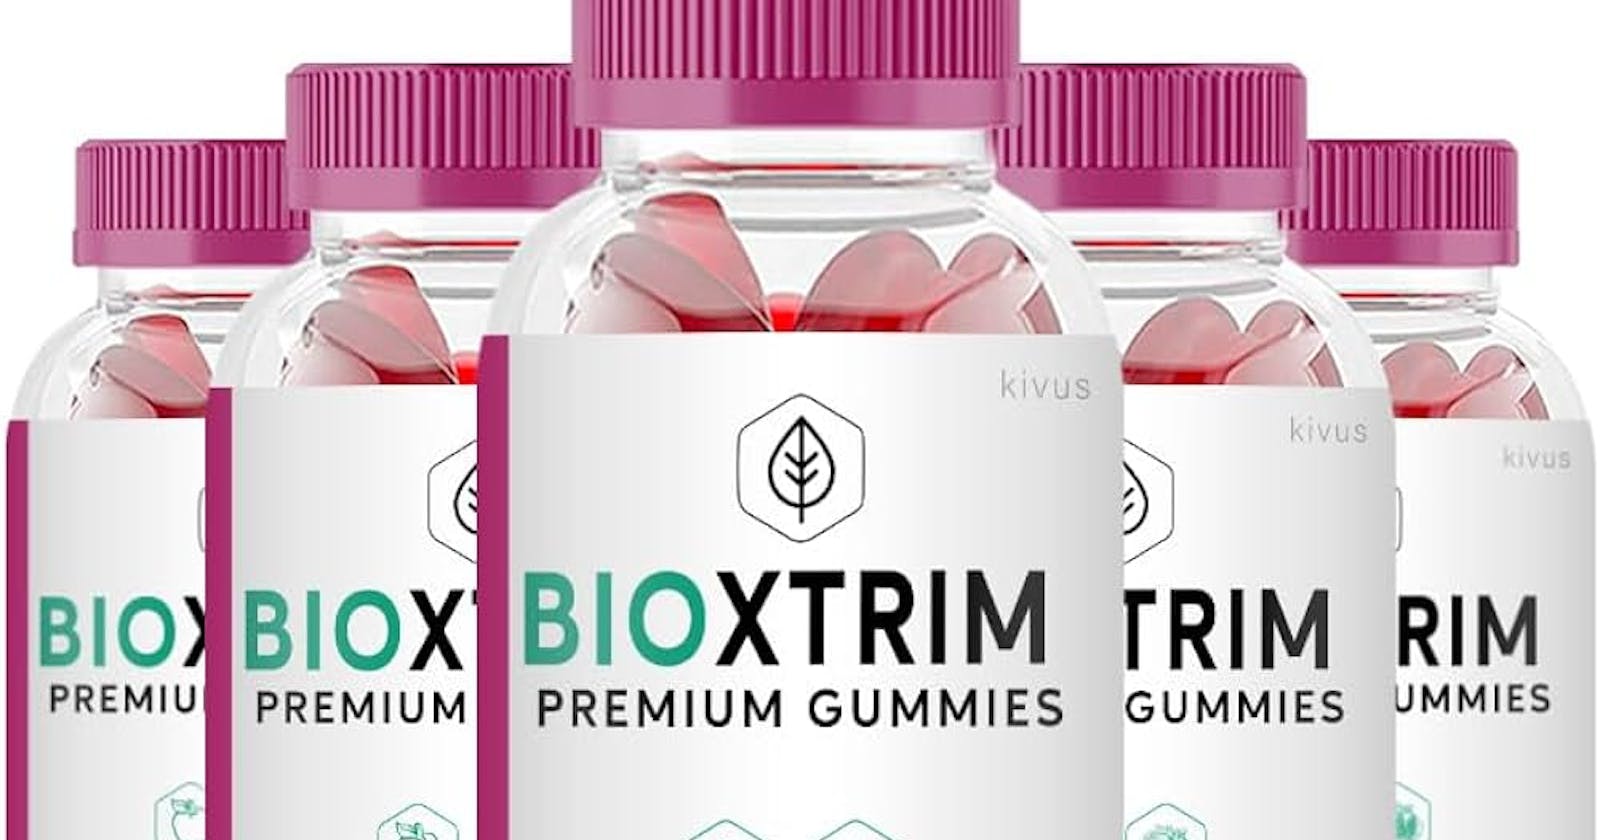 BioXTrim Gummies UK – (FAKE NEWSALERT) IS IT SCAM OR TRUKTED -Universal Overview Trend!!